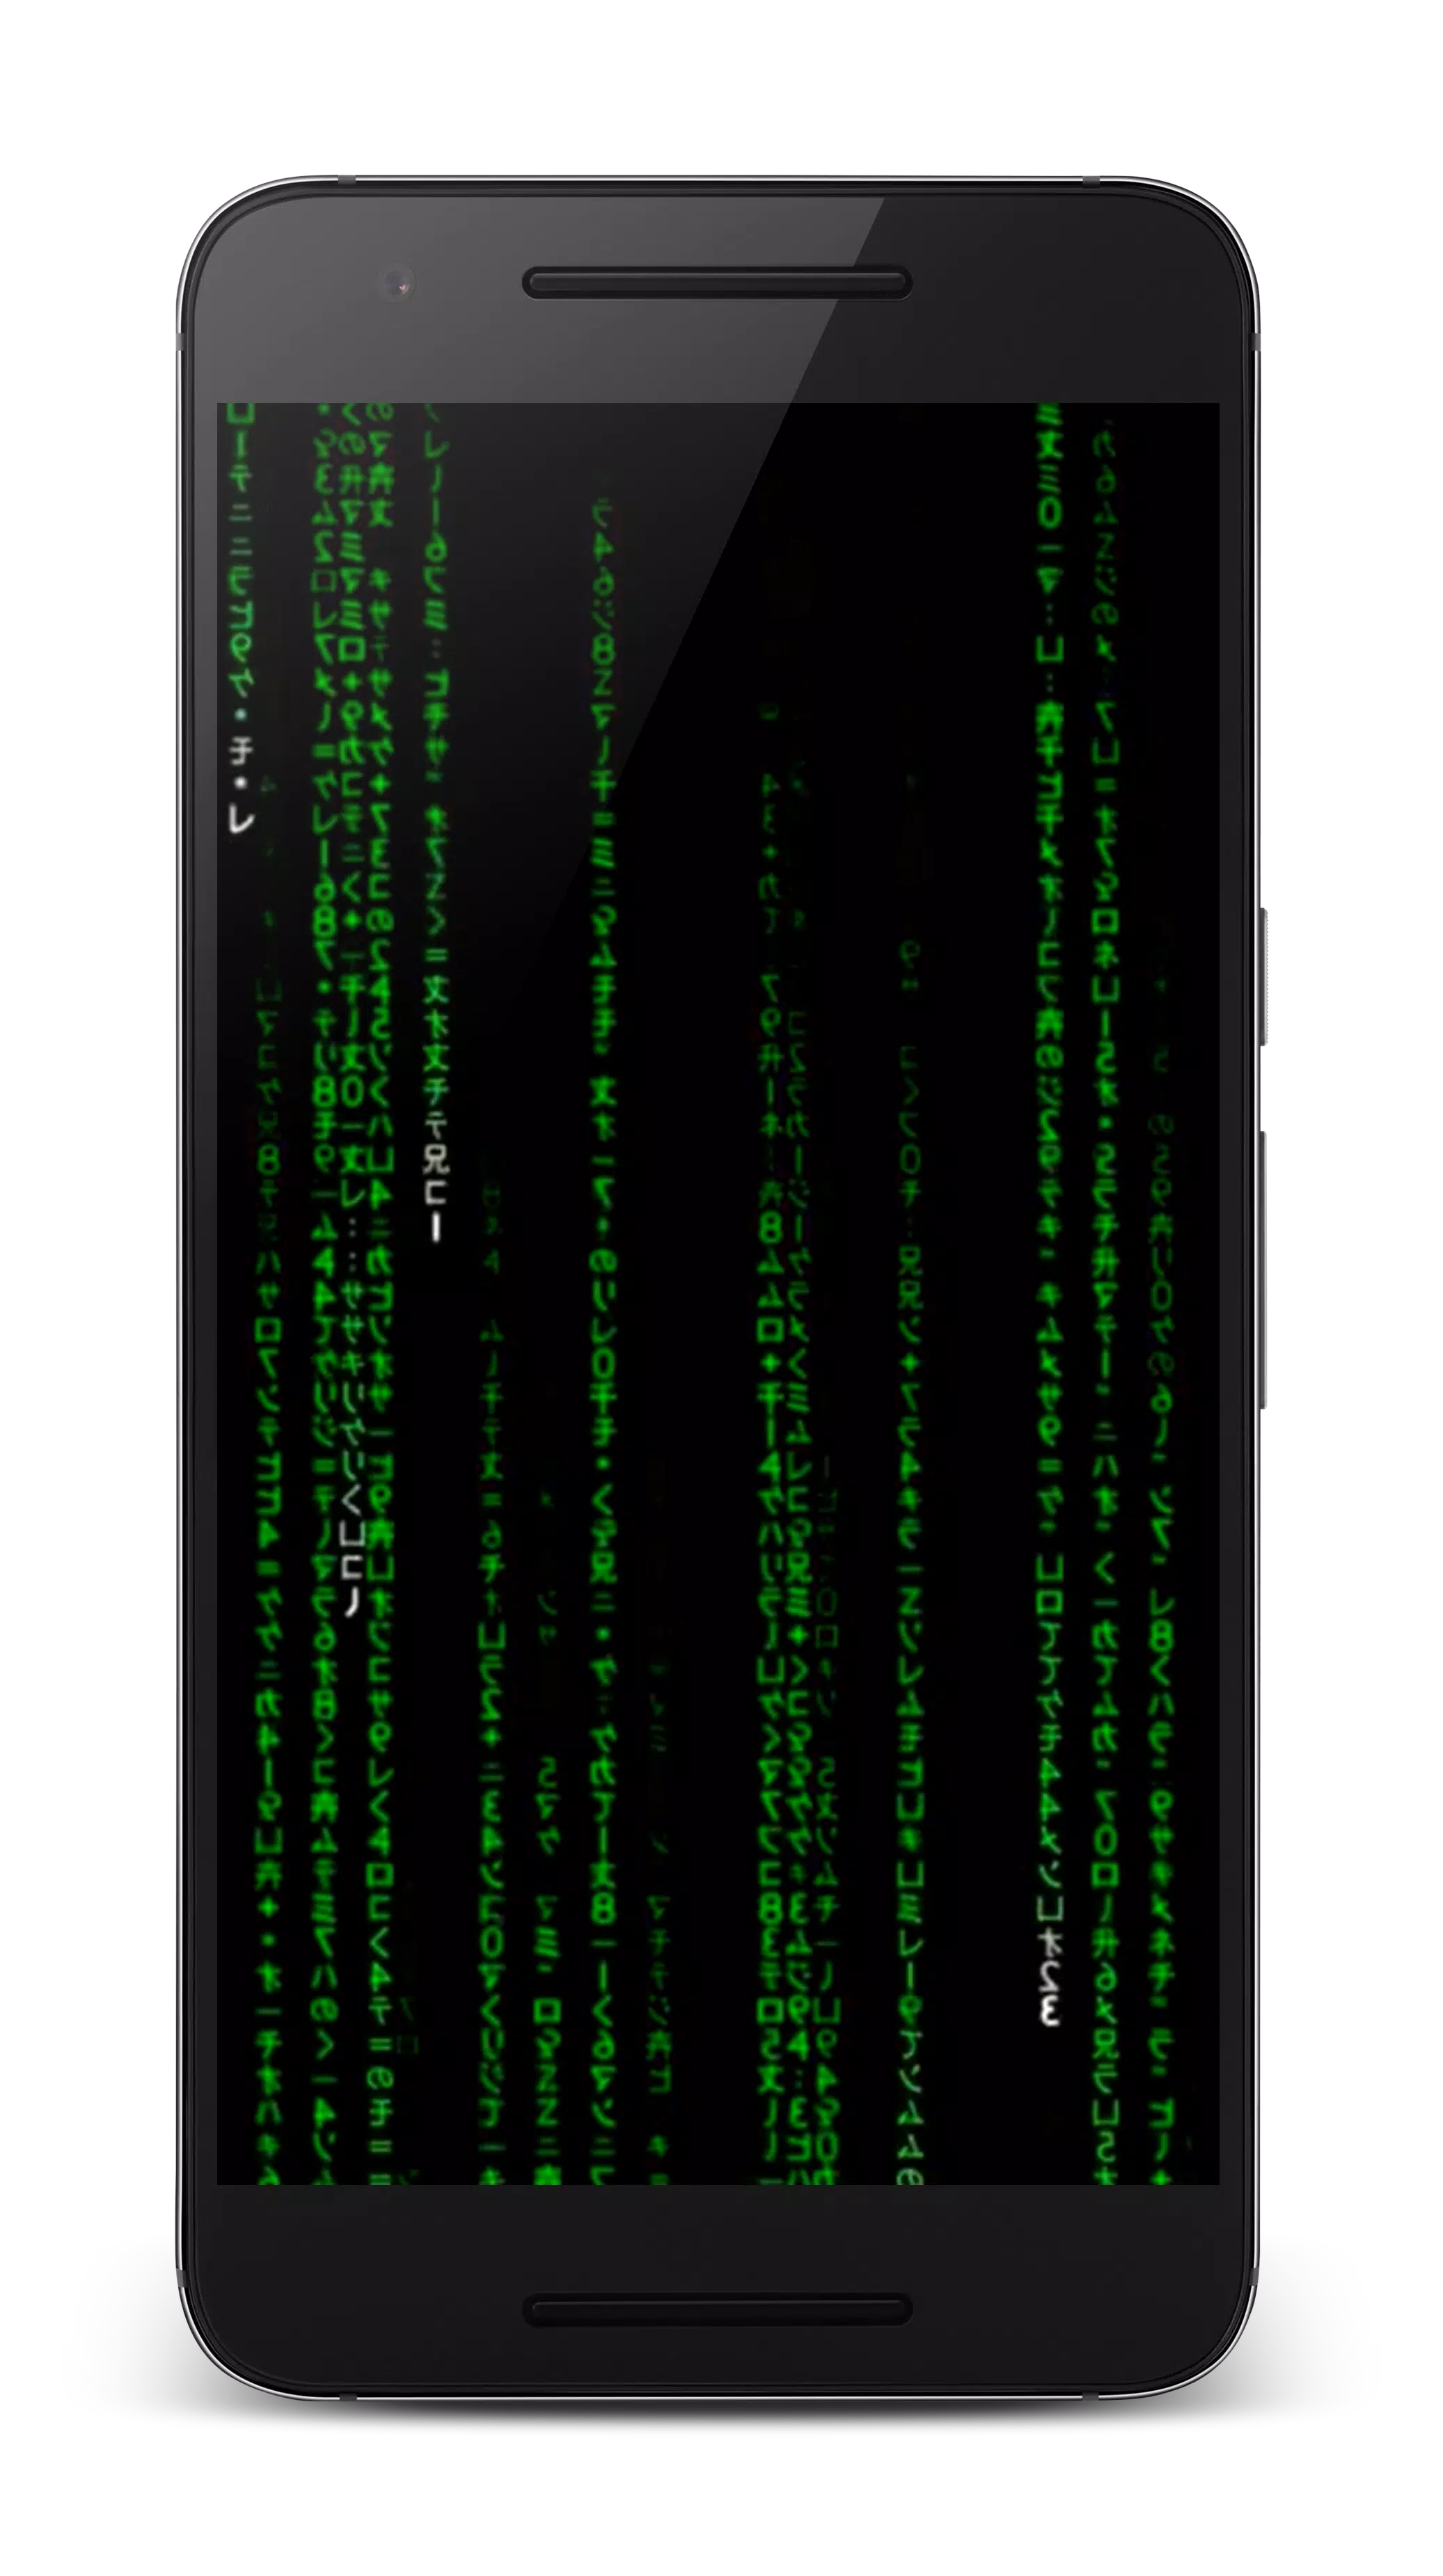 Matrix Live Wallpaper APK for Android Download